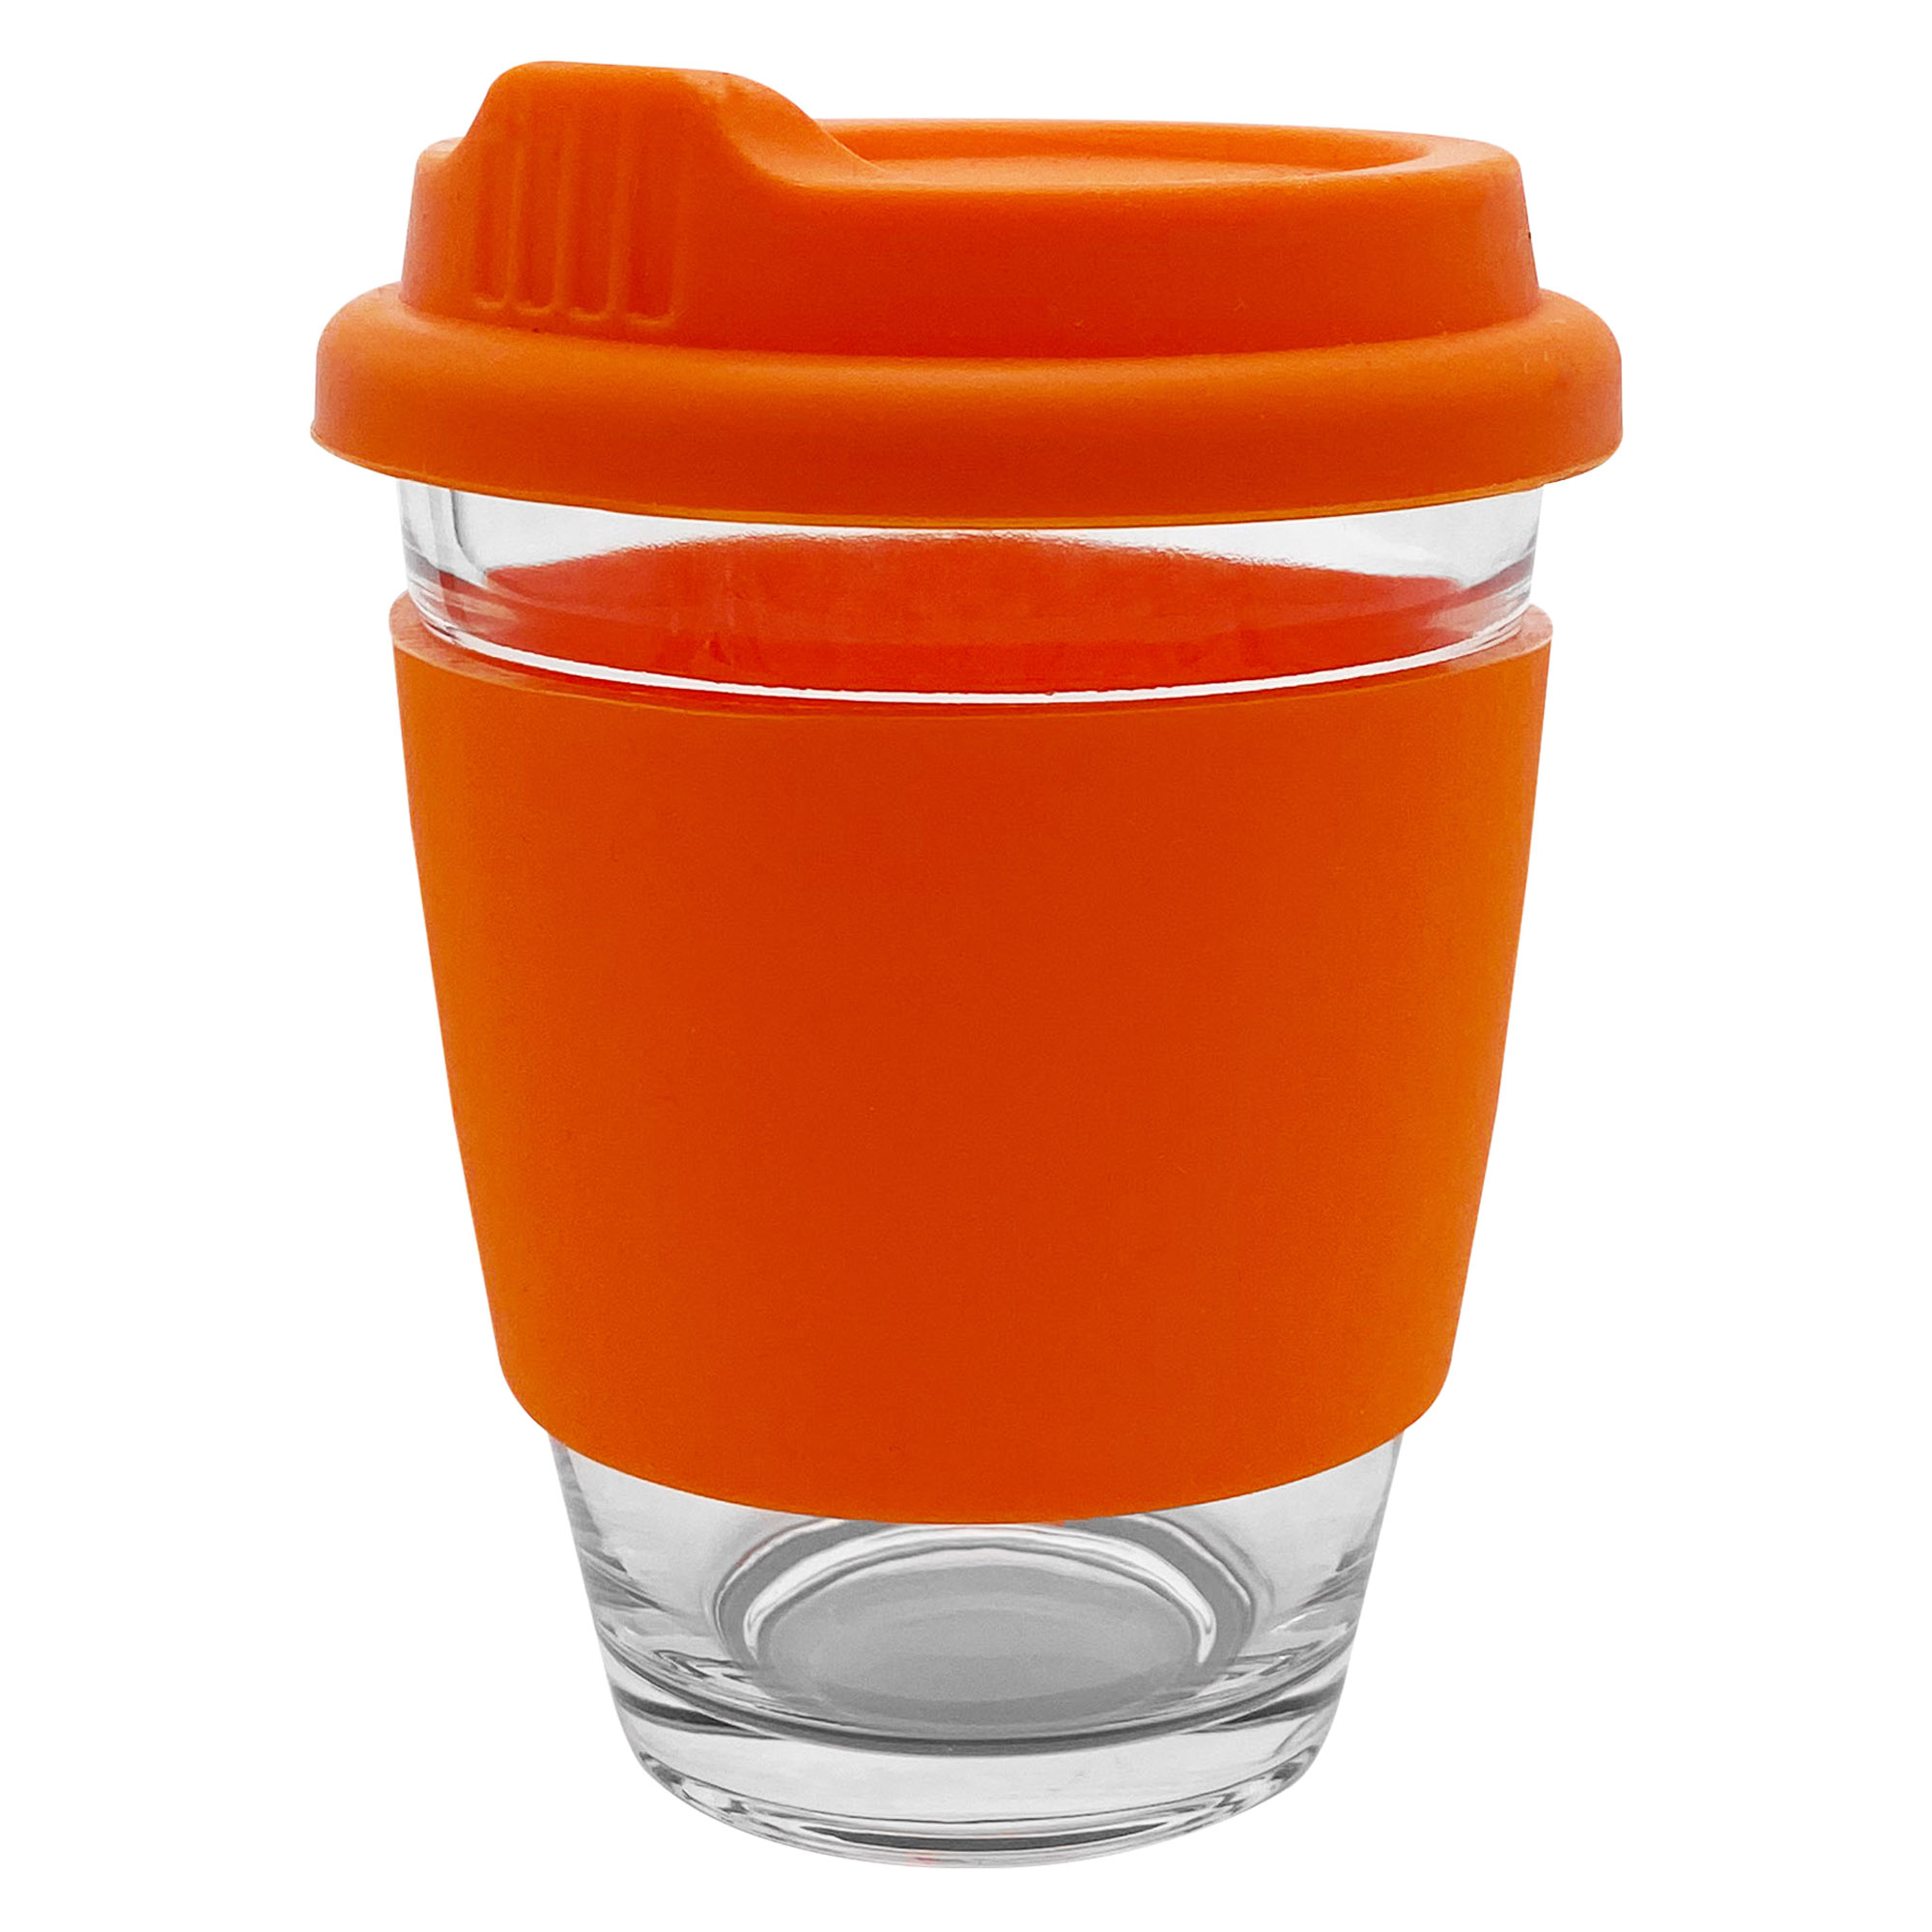 Bulk Promotional Orange Carlo Glass Coffee Cup Silicone Band Online In Perth Australia